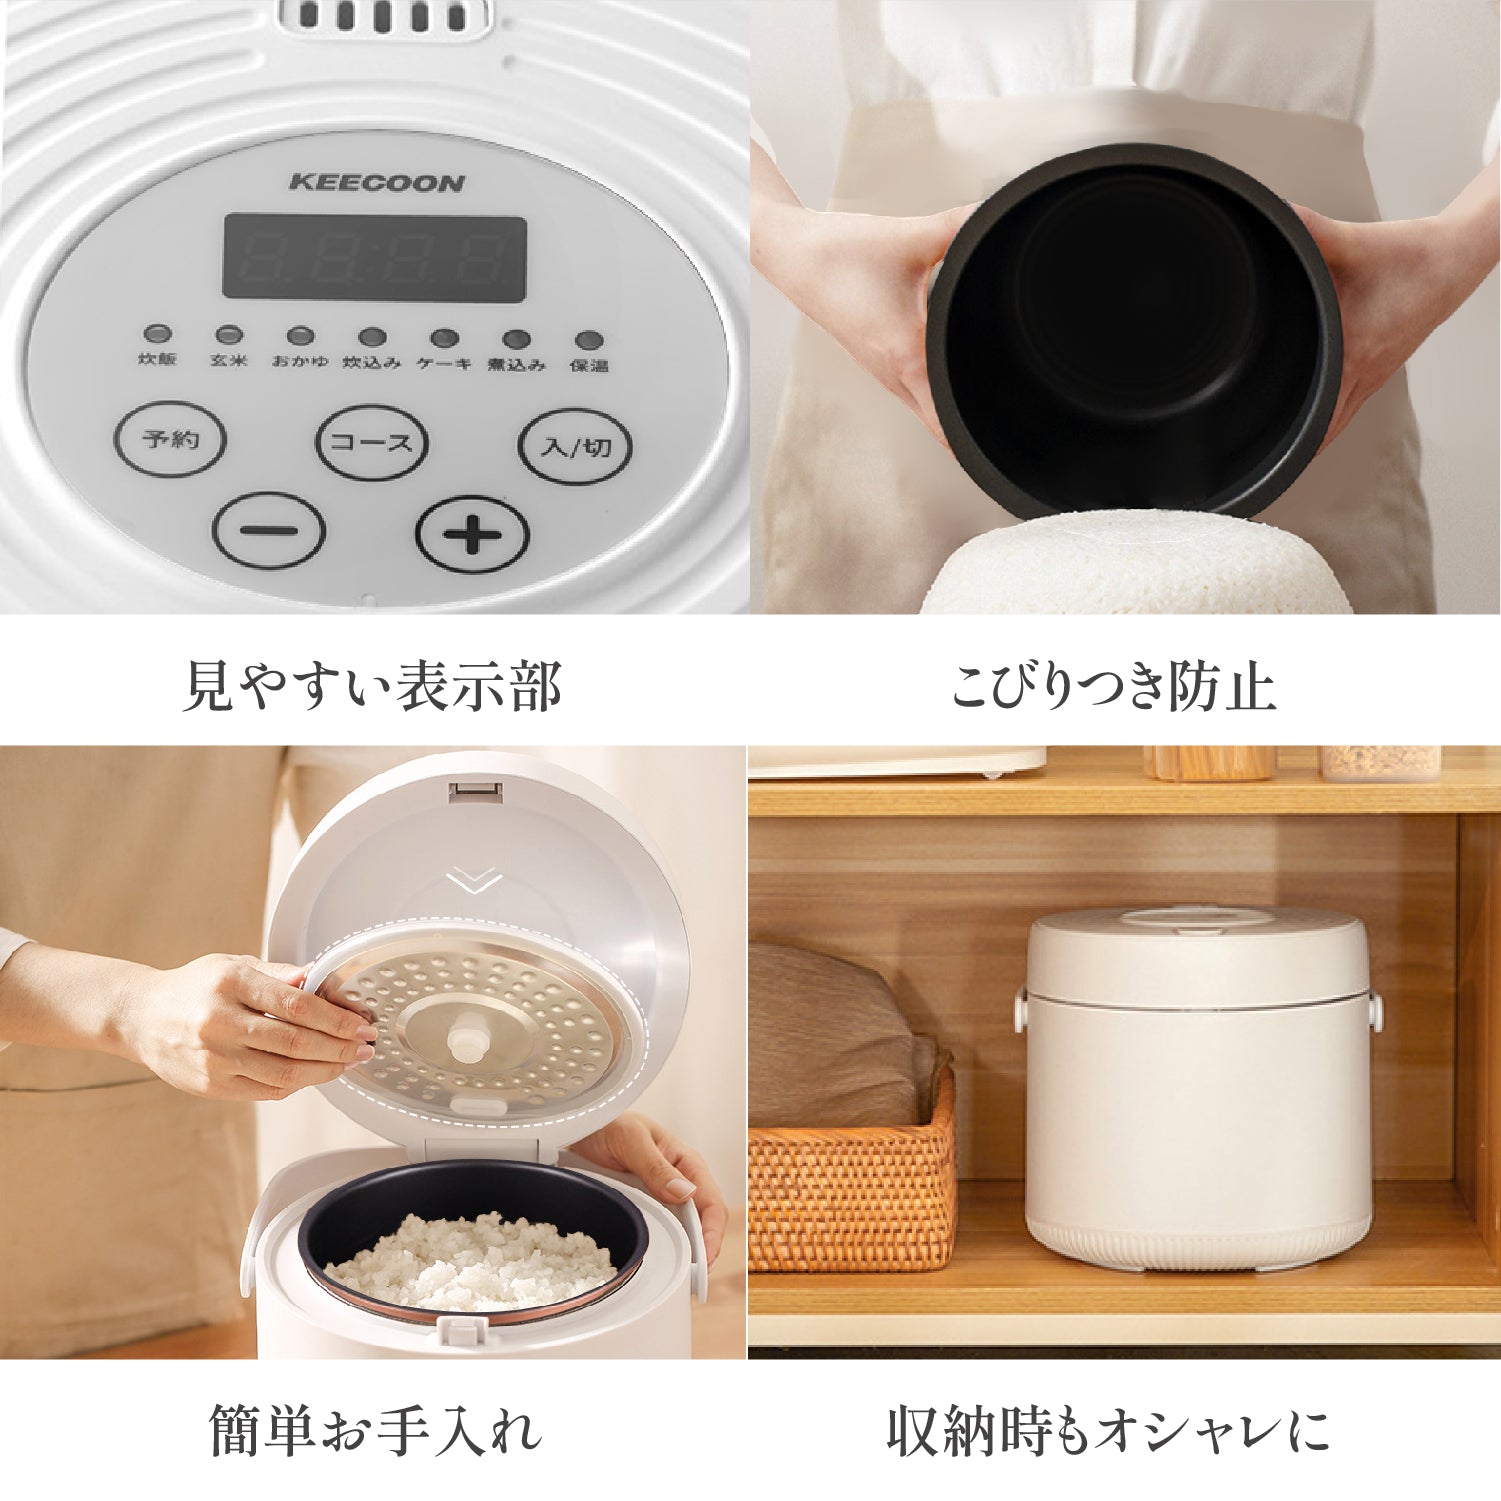 Keecoon 炊飯器 3合 一人暮らし ミニ炊飯器 小型 マイコン式 6つの便利